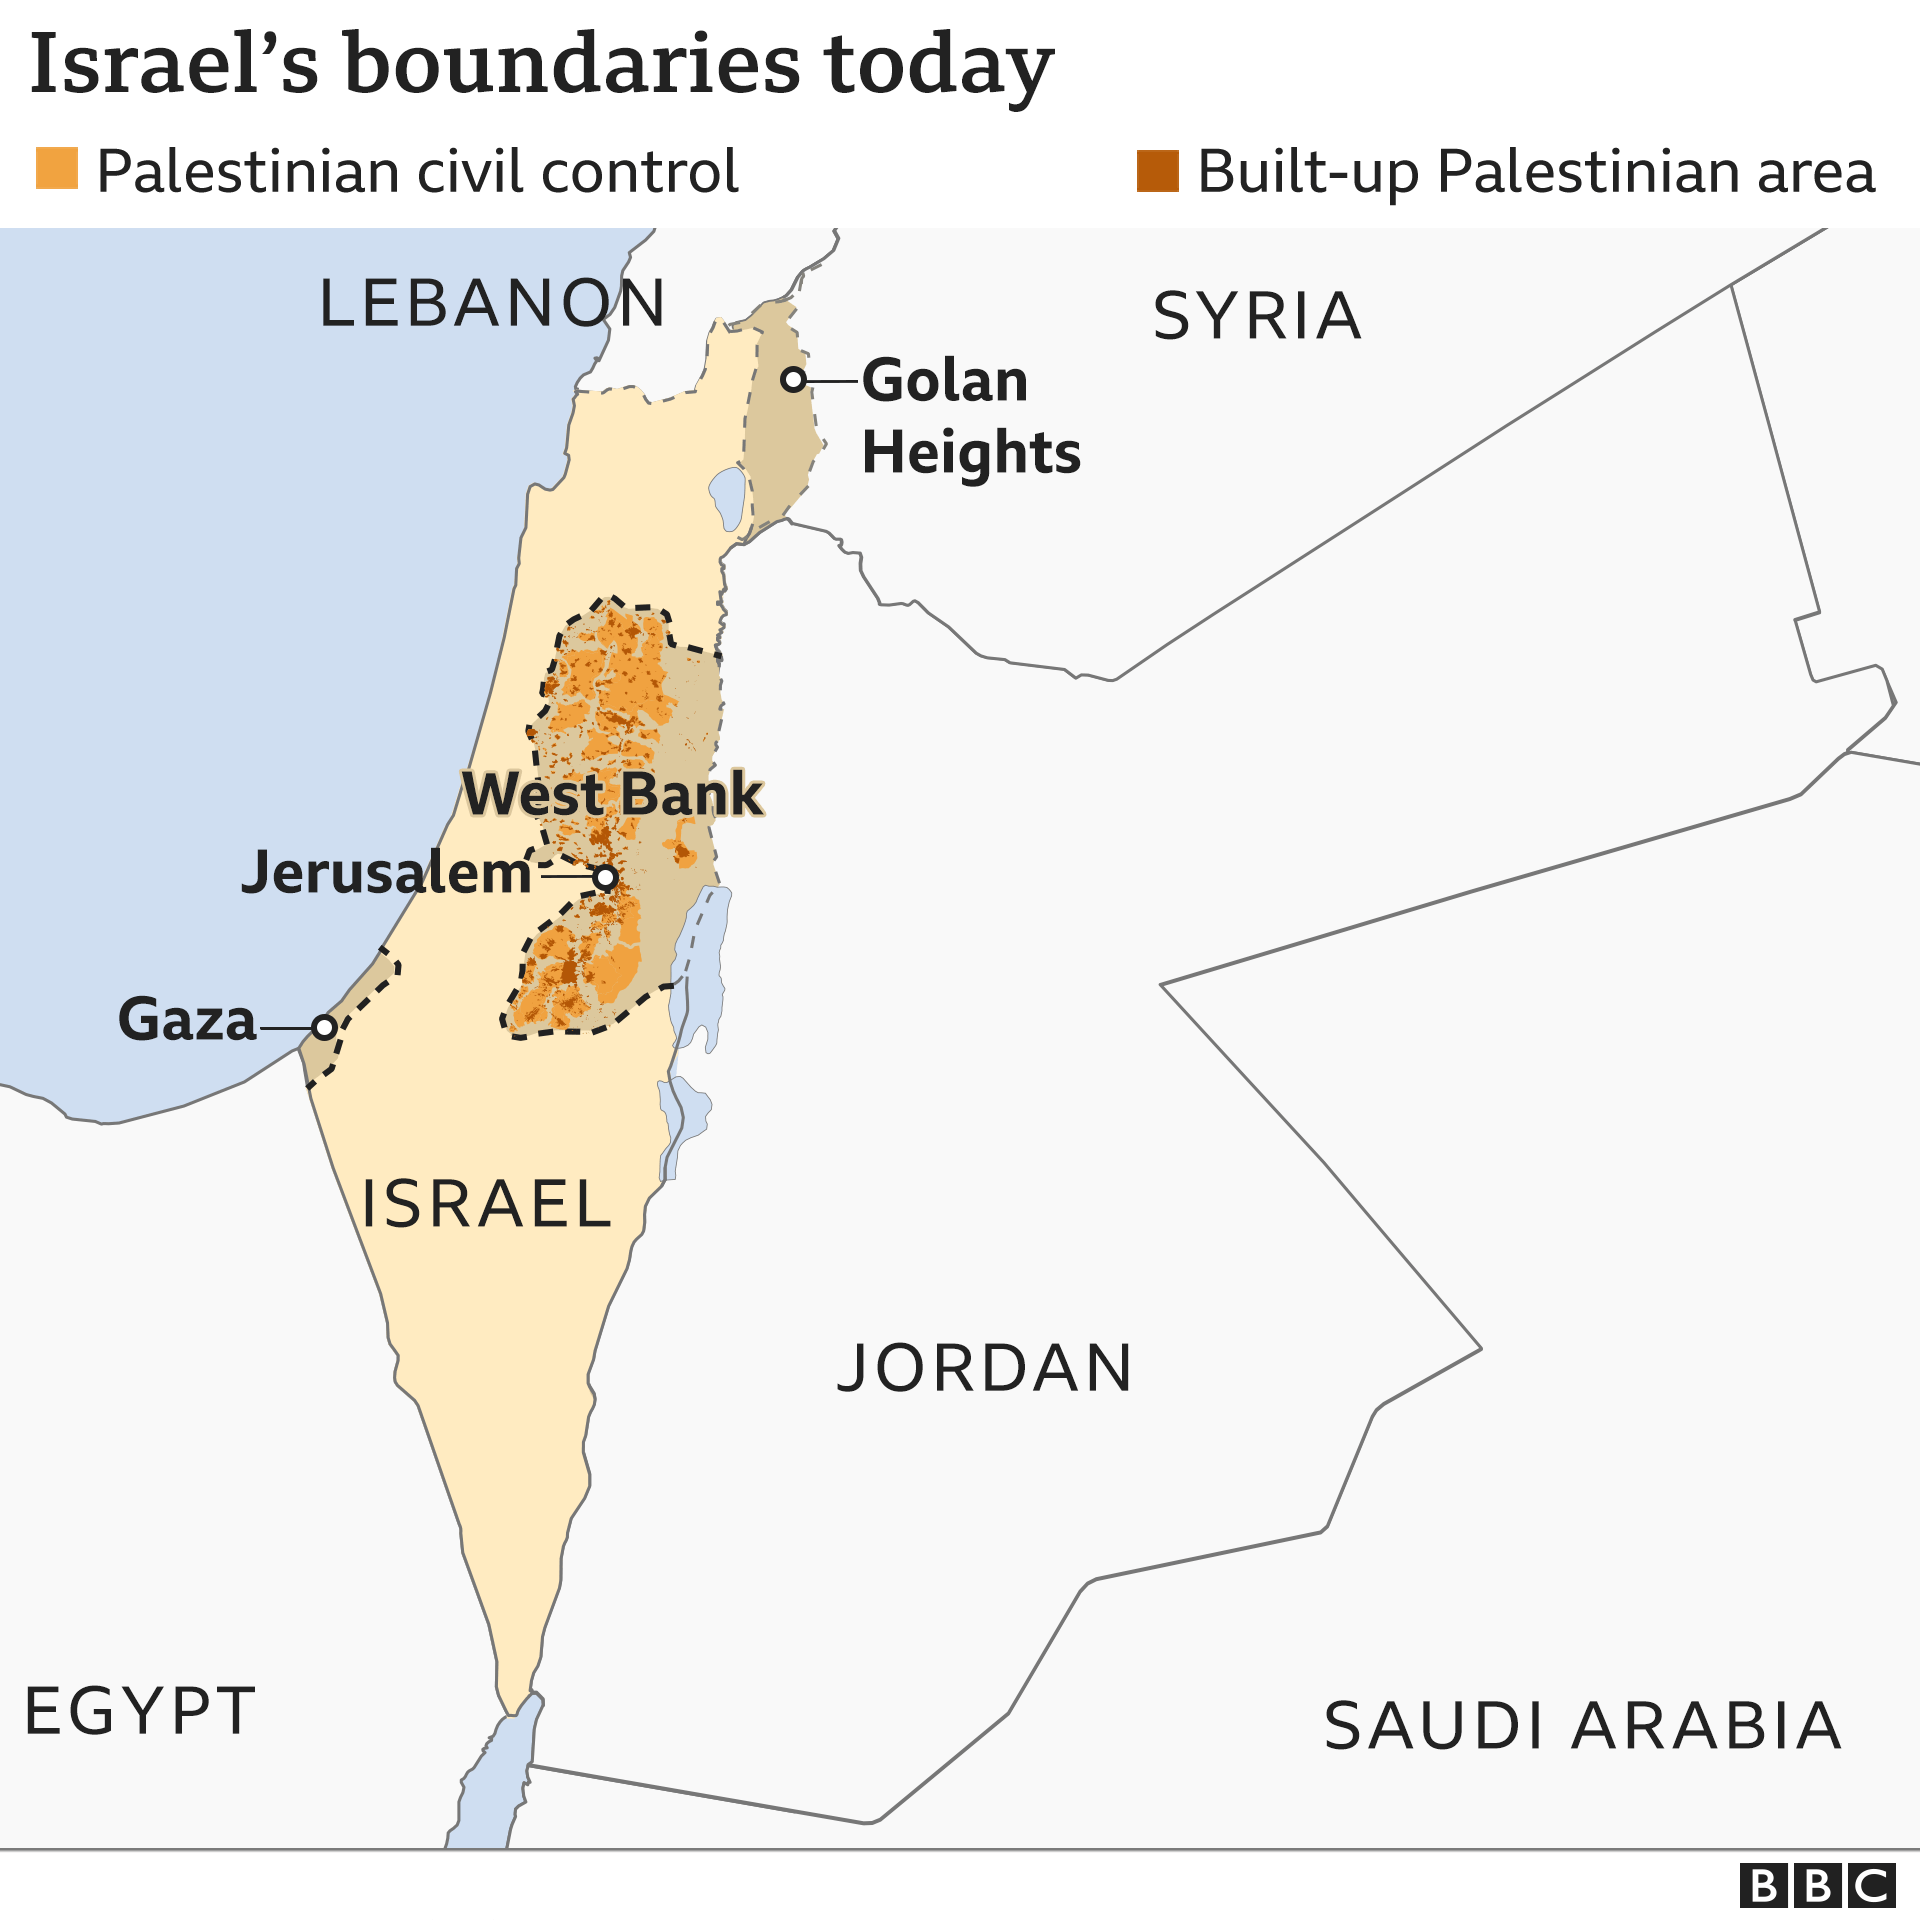 Map of Israel's boundaries today